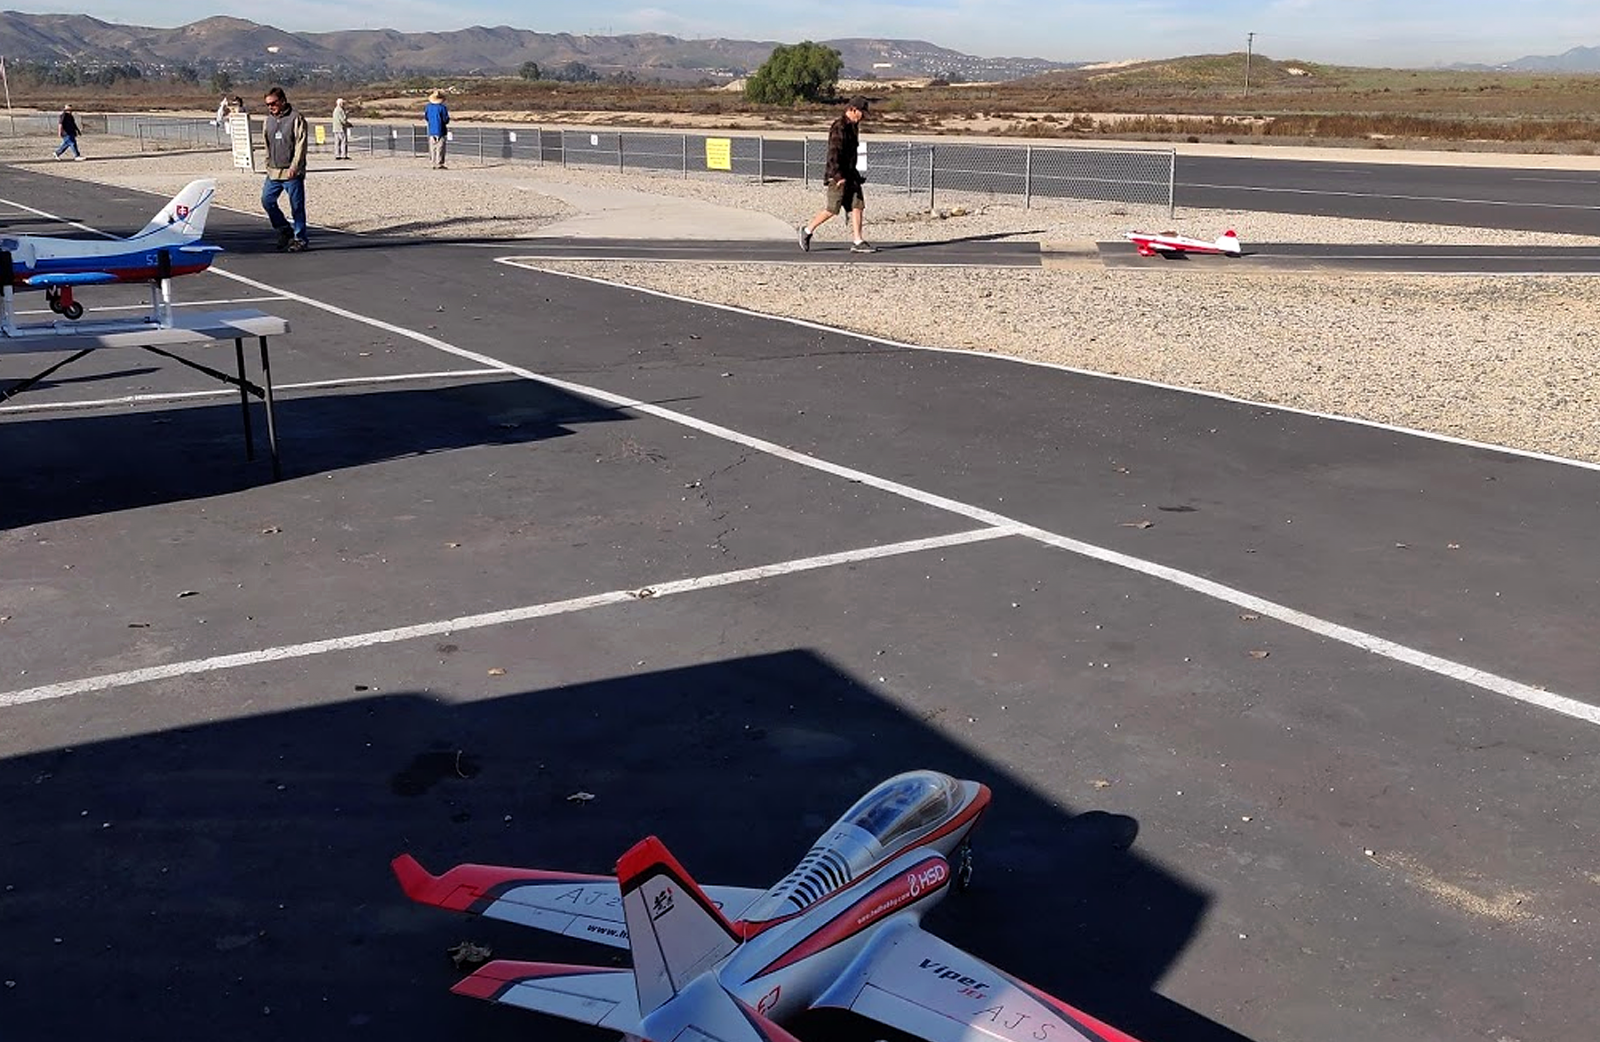 Model airplanes sit on the asphalt a Prado park airfield.